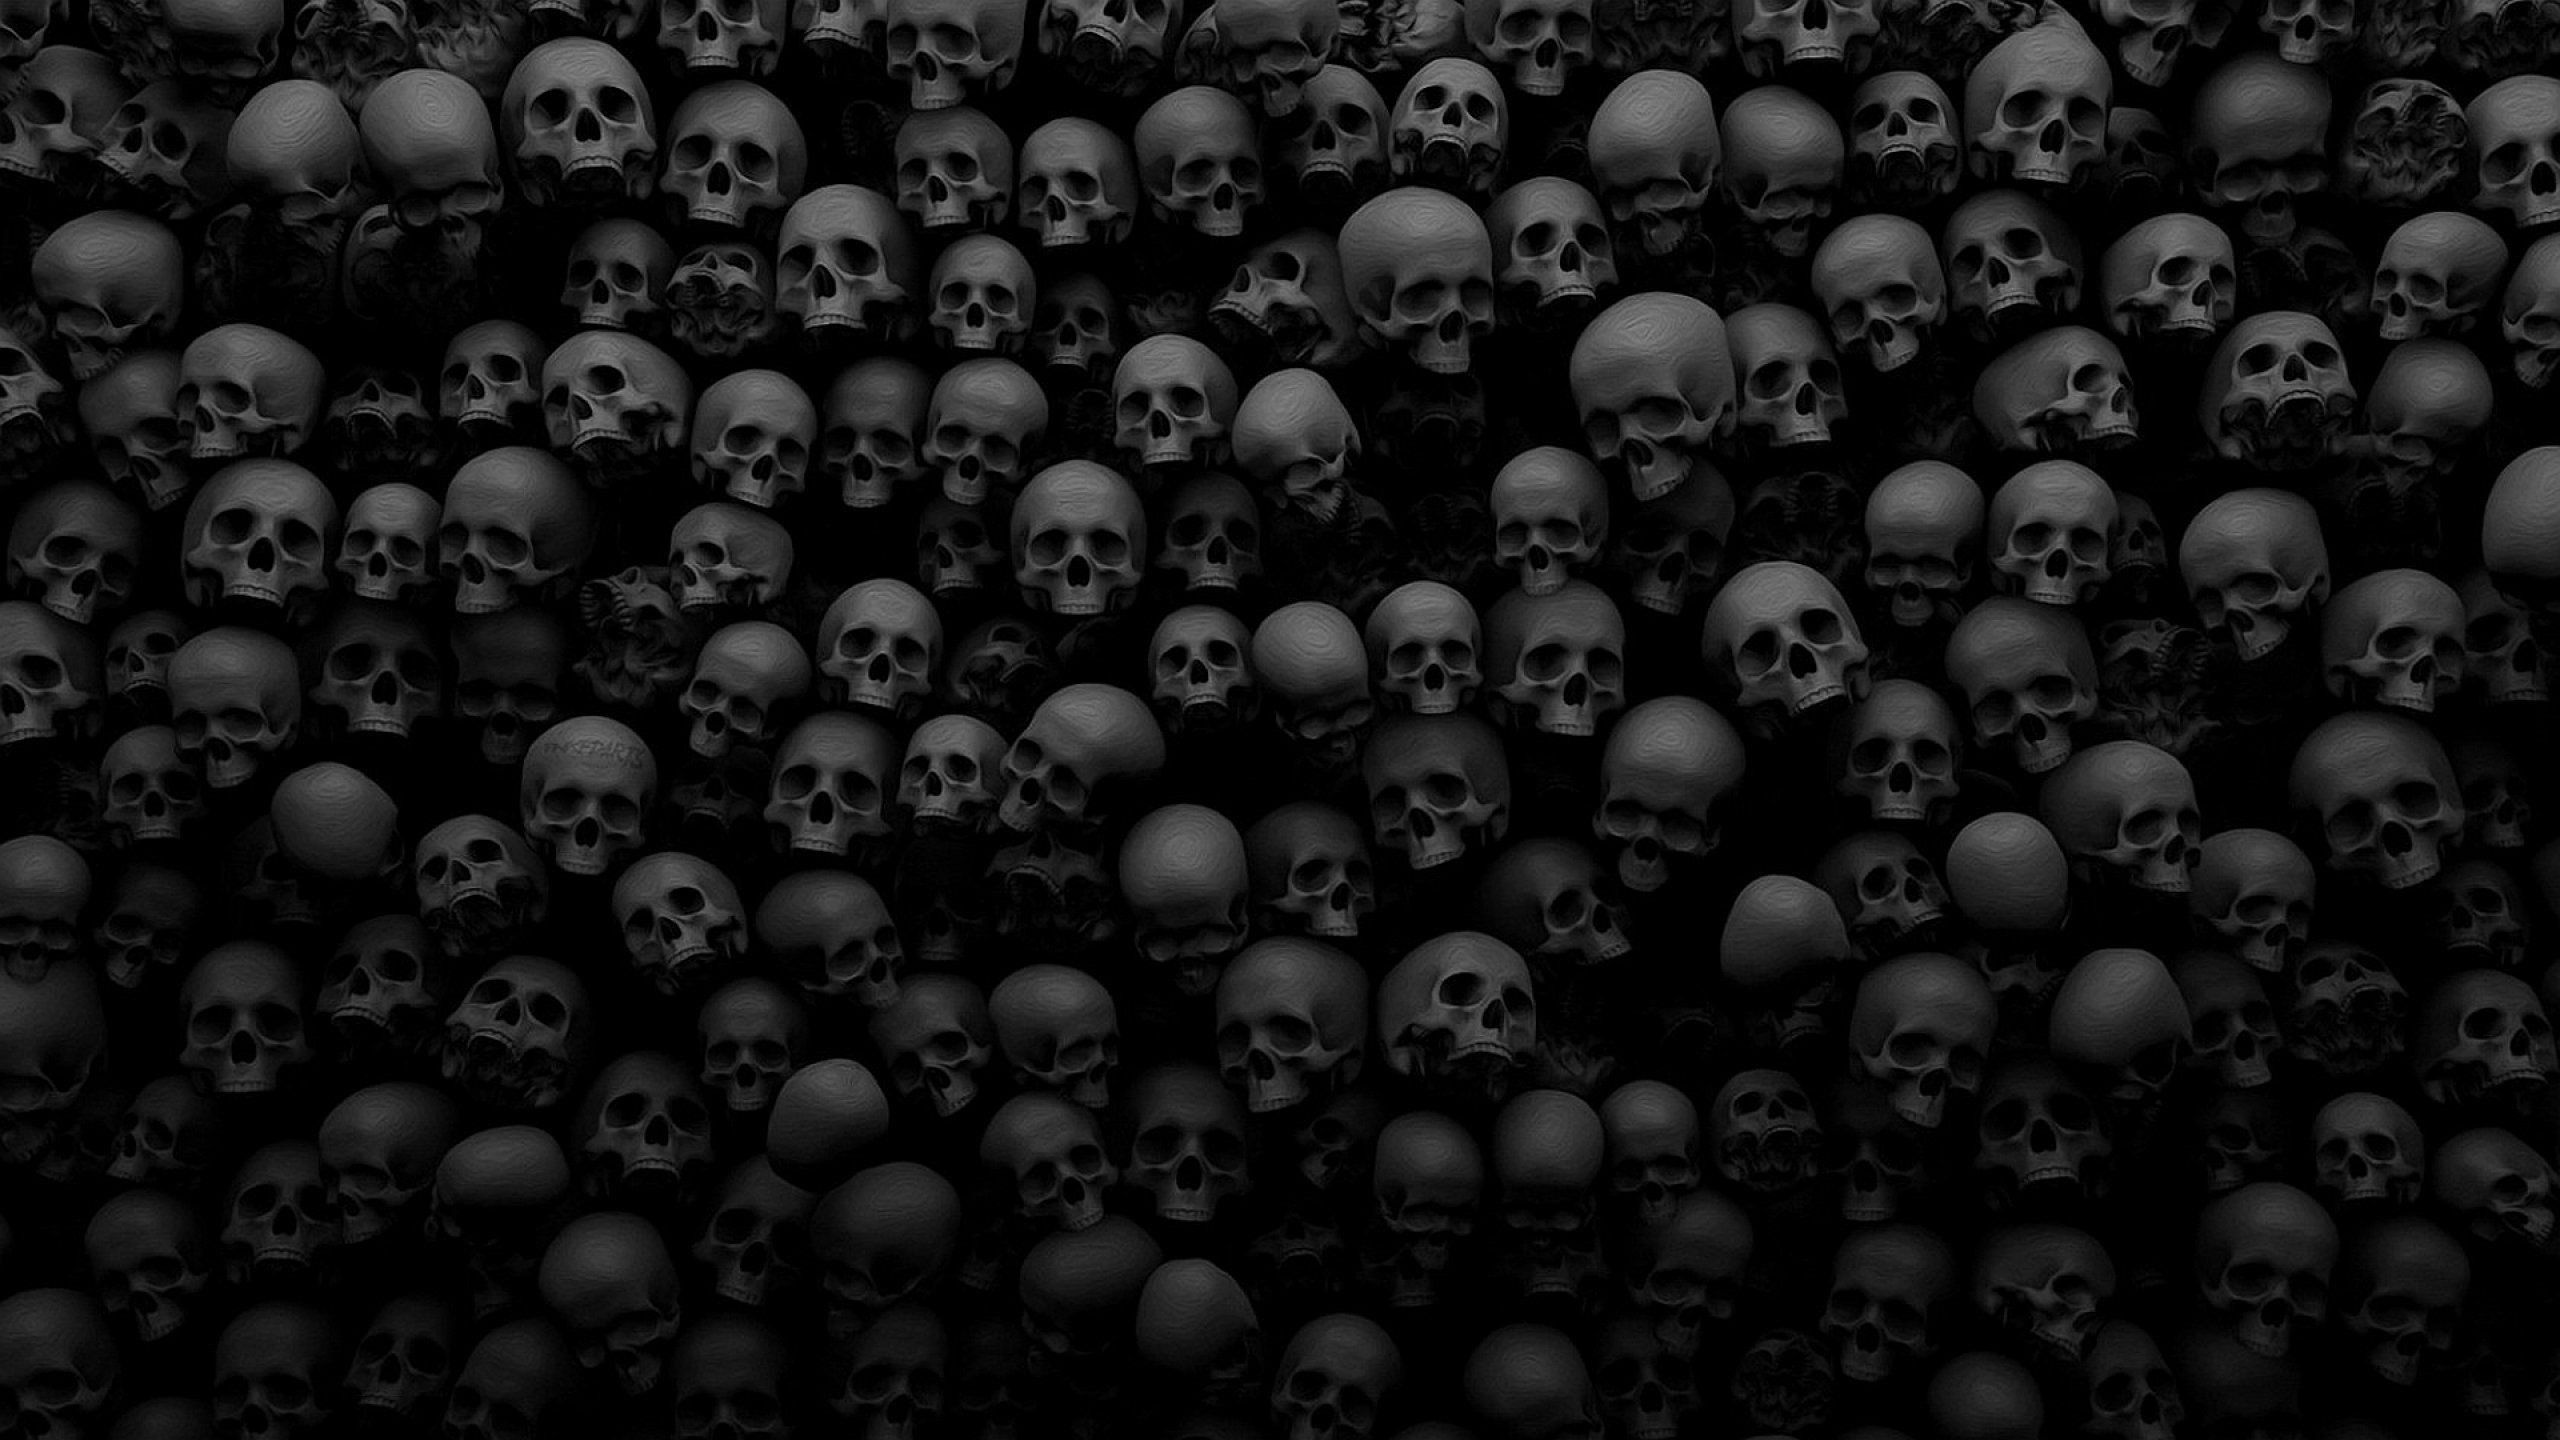 A black and white image of skulls - Creepy, horror